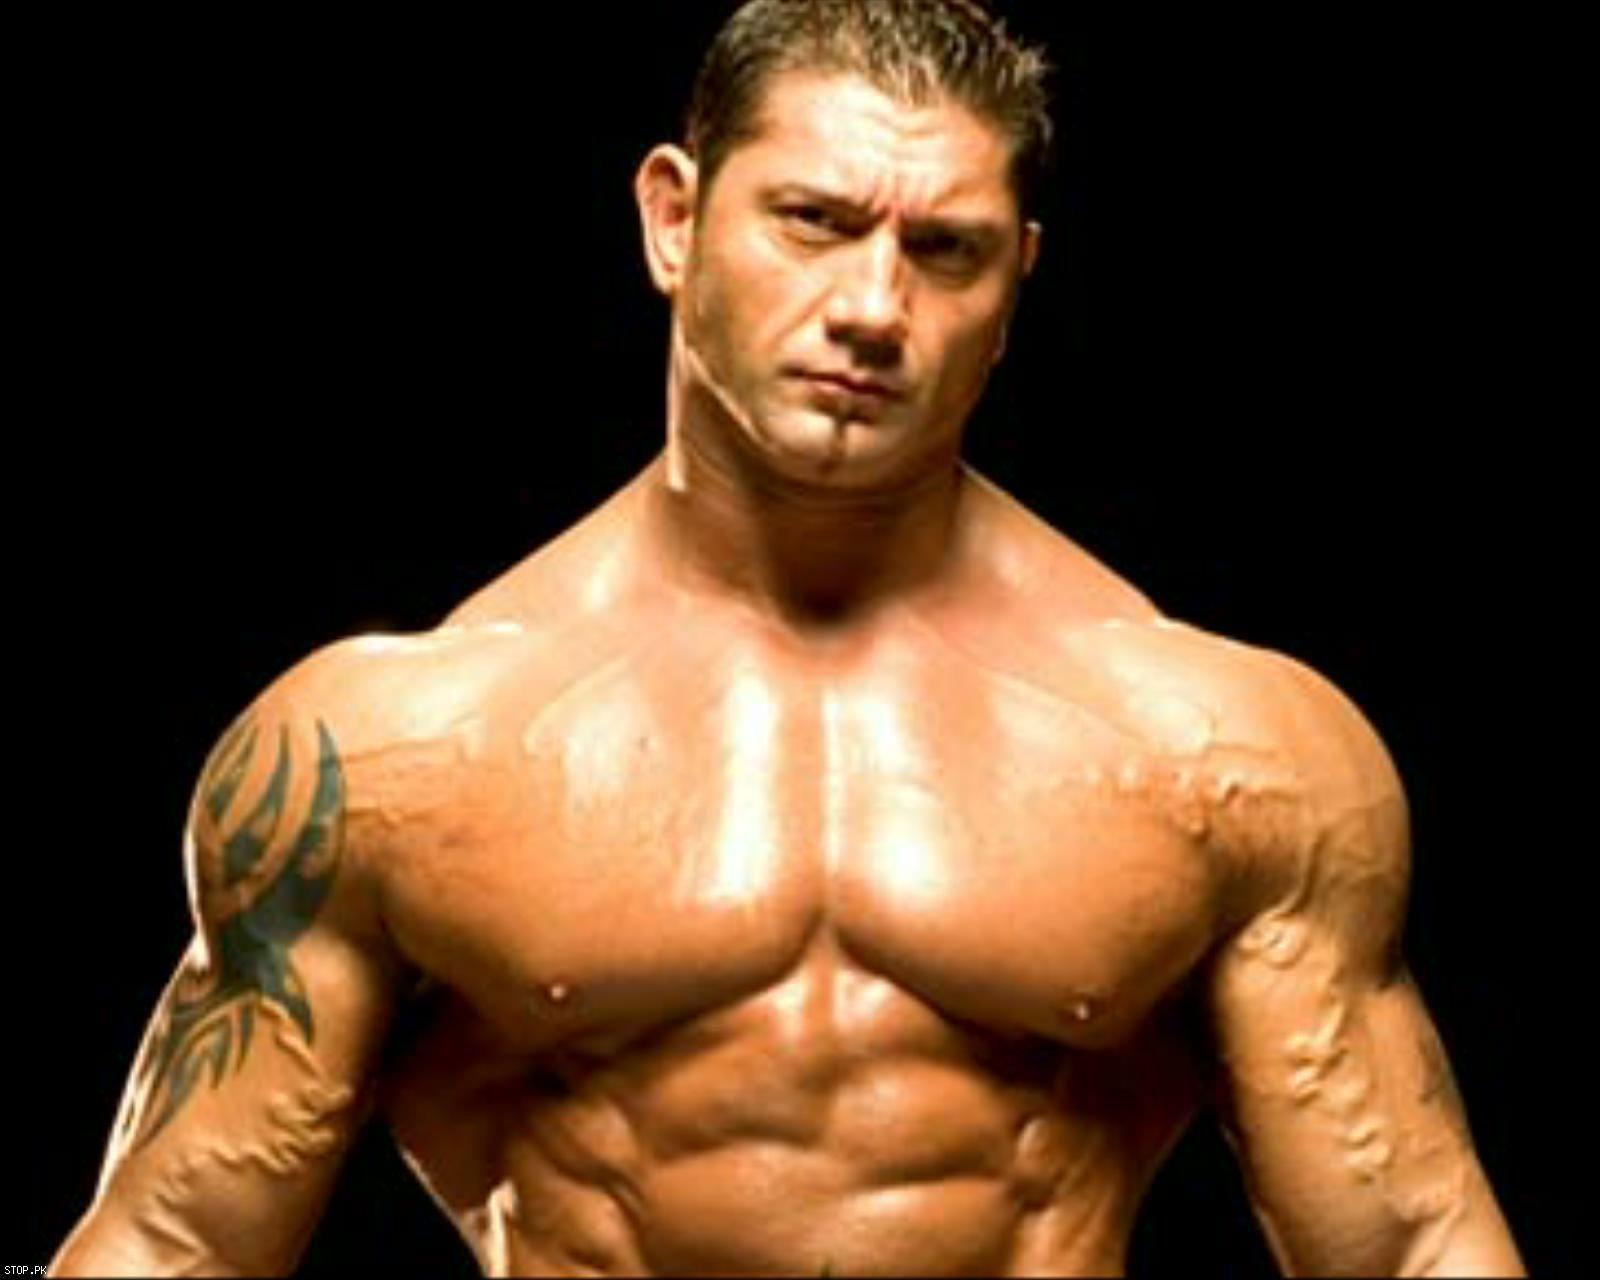 WWE Wallpaper HD Batista.com Best Wallpaper Collections